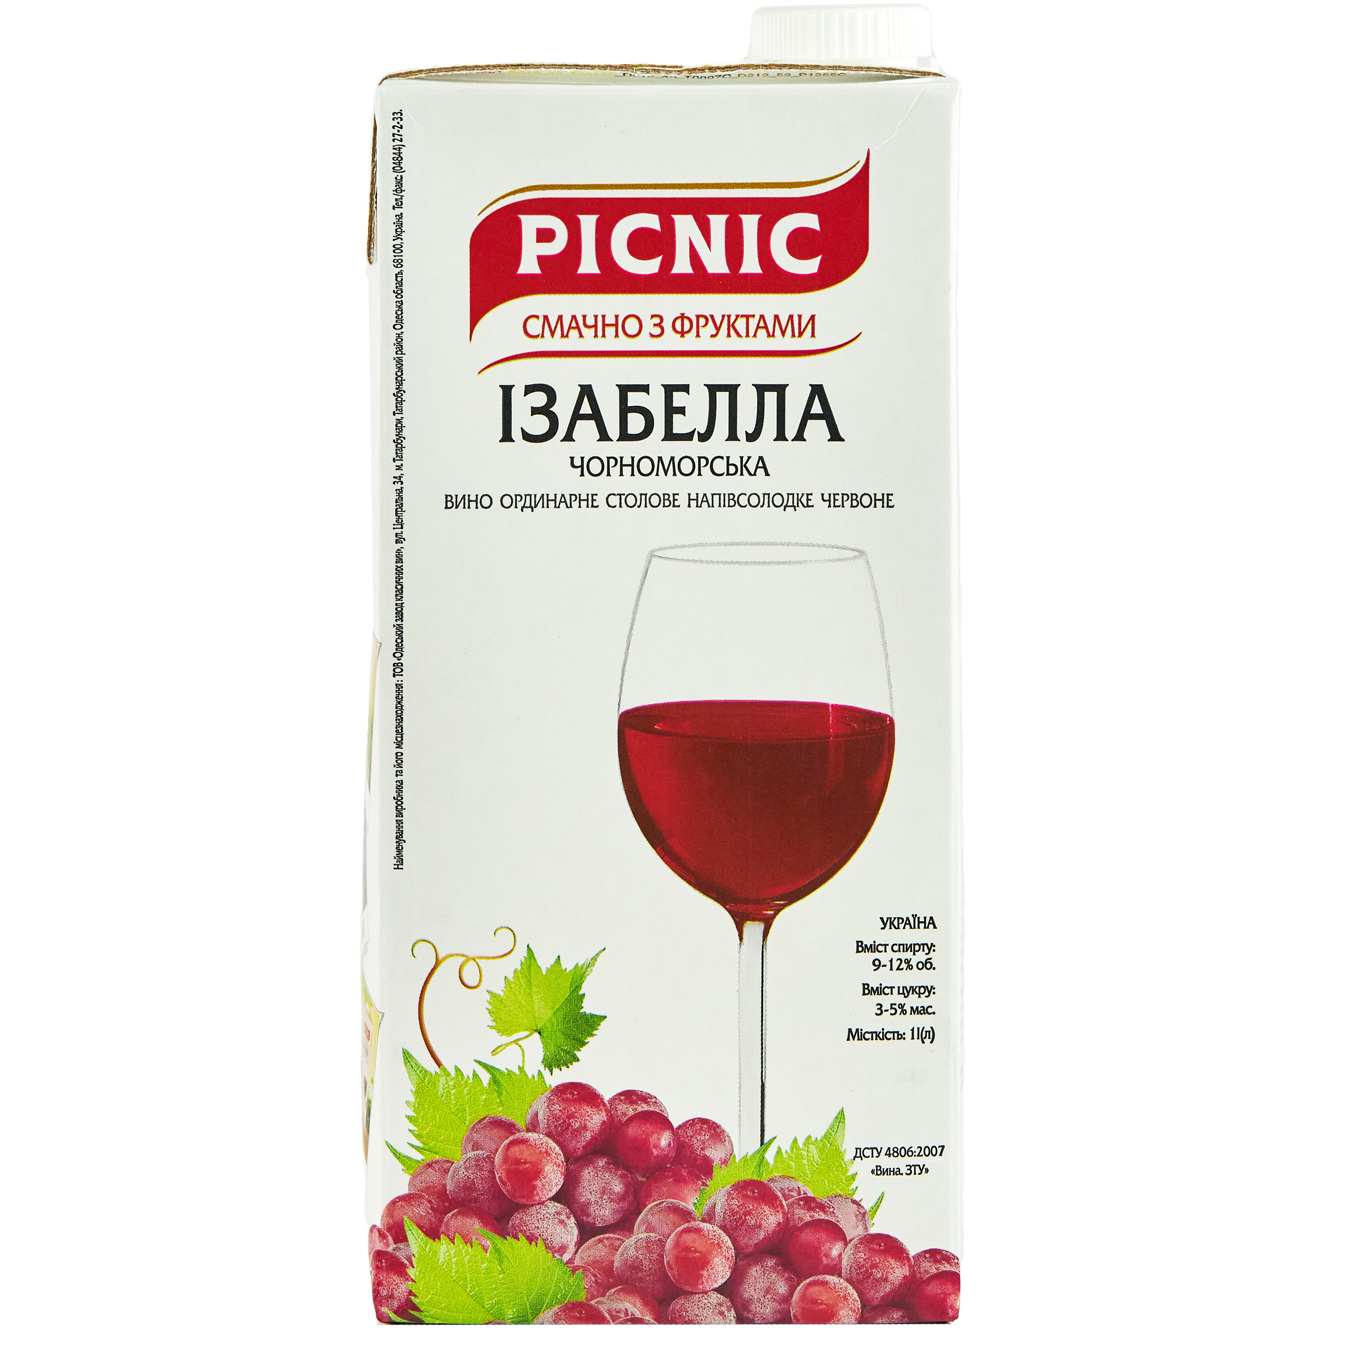 Wine Picnic Izabella red semi-sweet dessert 9-12% 1l